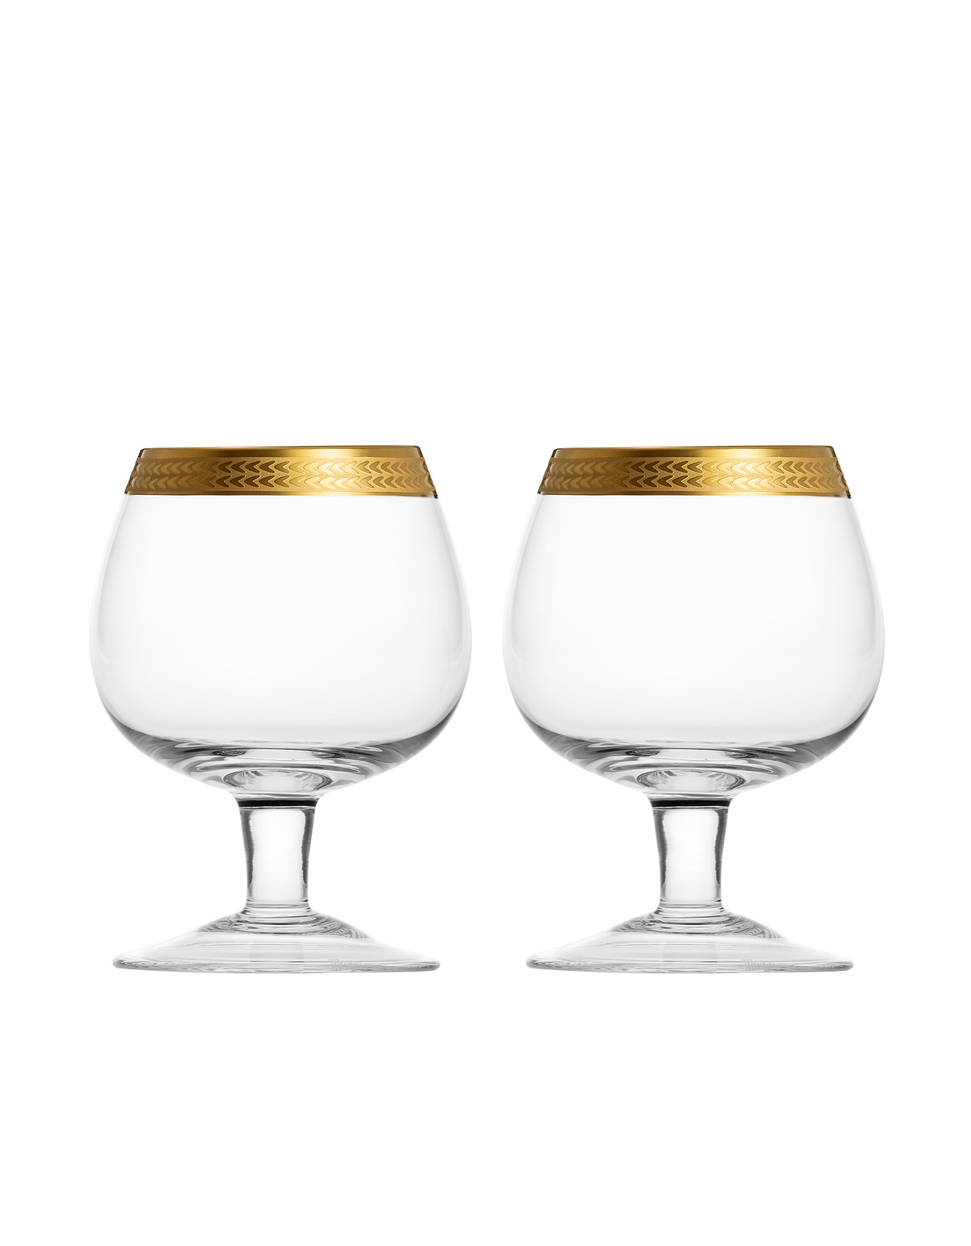 Brandy & Cognac glass, 320 ml – set of 2 glasses